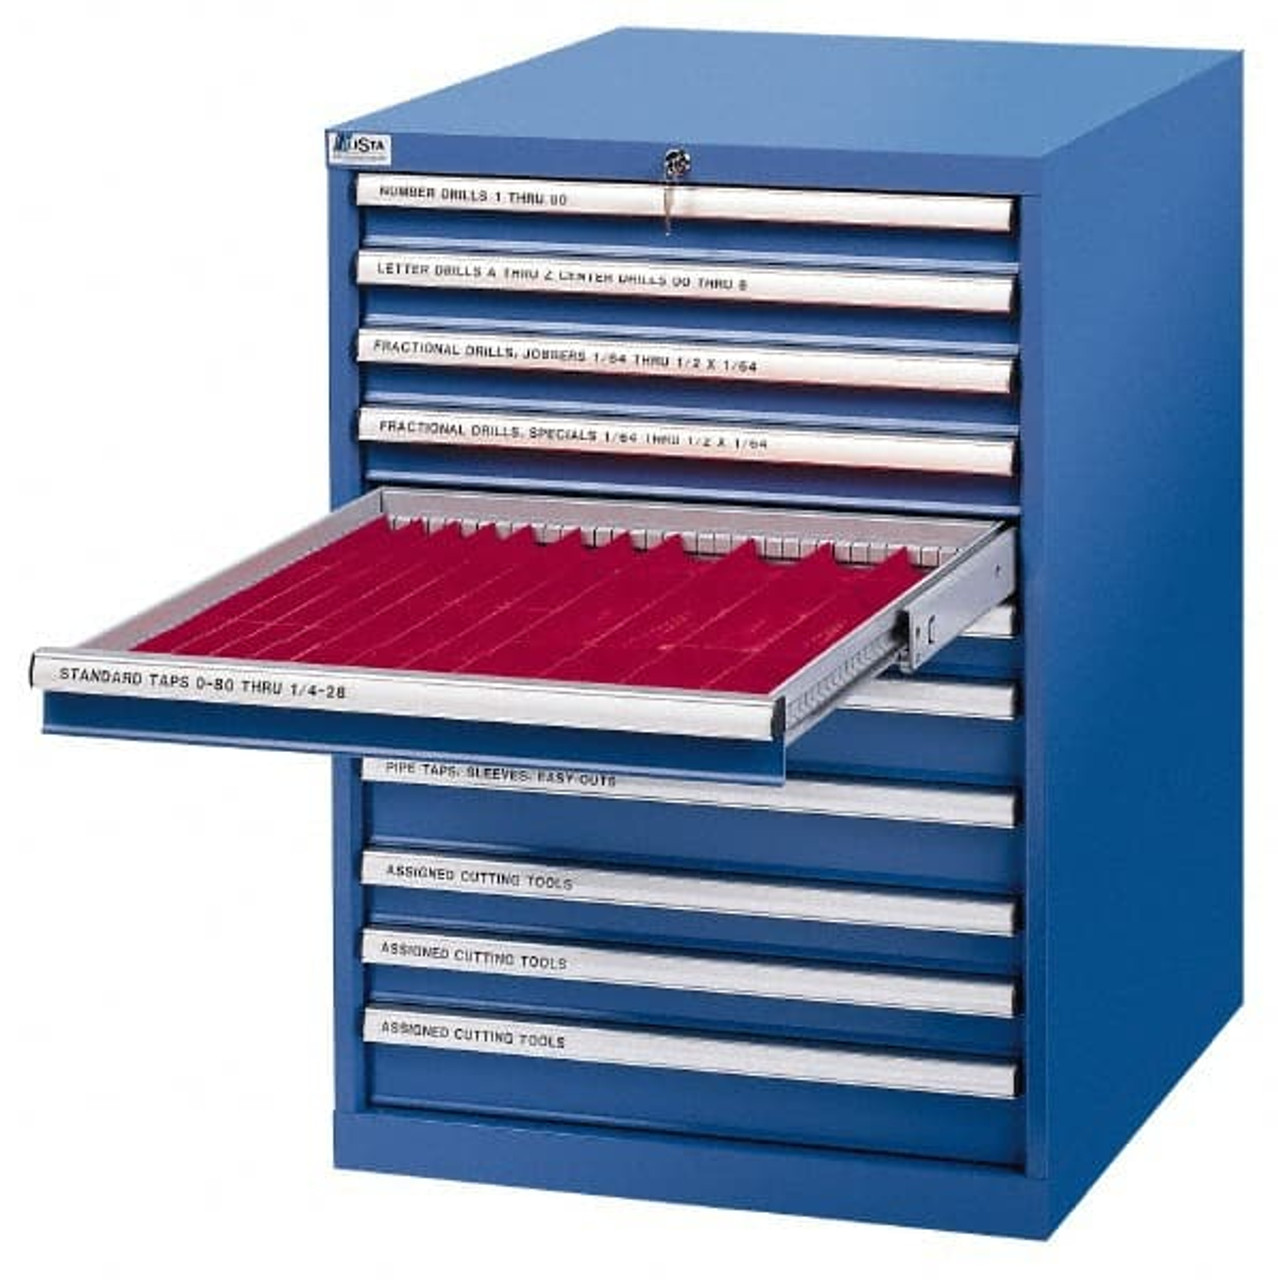 LISTA 10 Drawer, 294 Compartment Blue Steel Tool Crib Storage